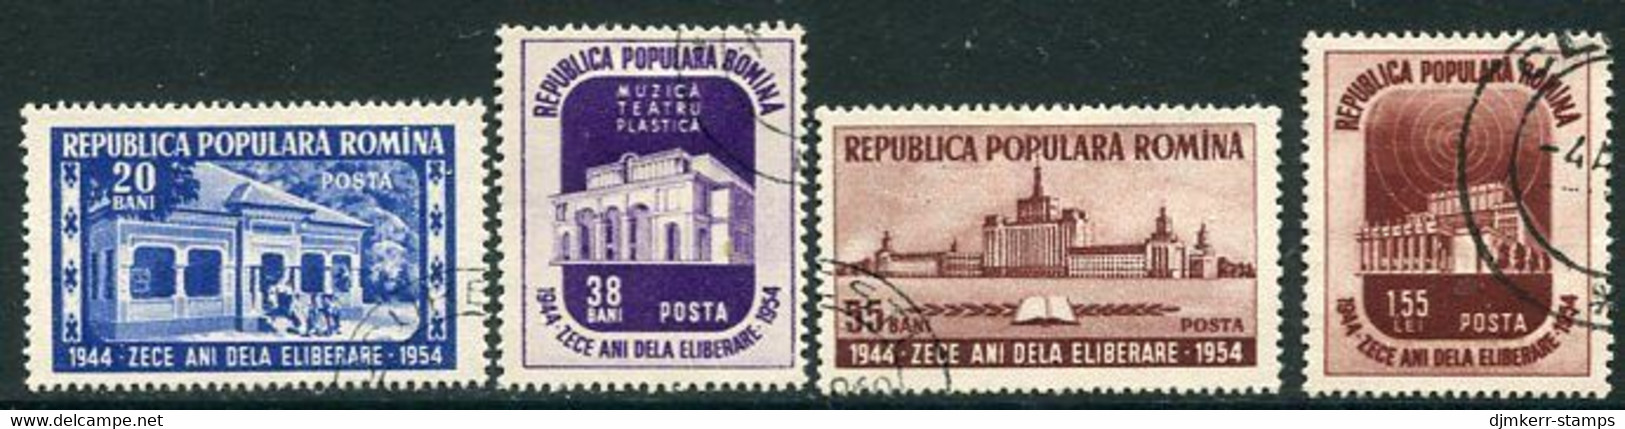 ROMANIA 1954 Overthrow Of Fascist Regime Used,  Michel 1484-87 - Used Stamps